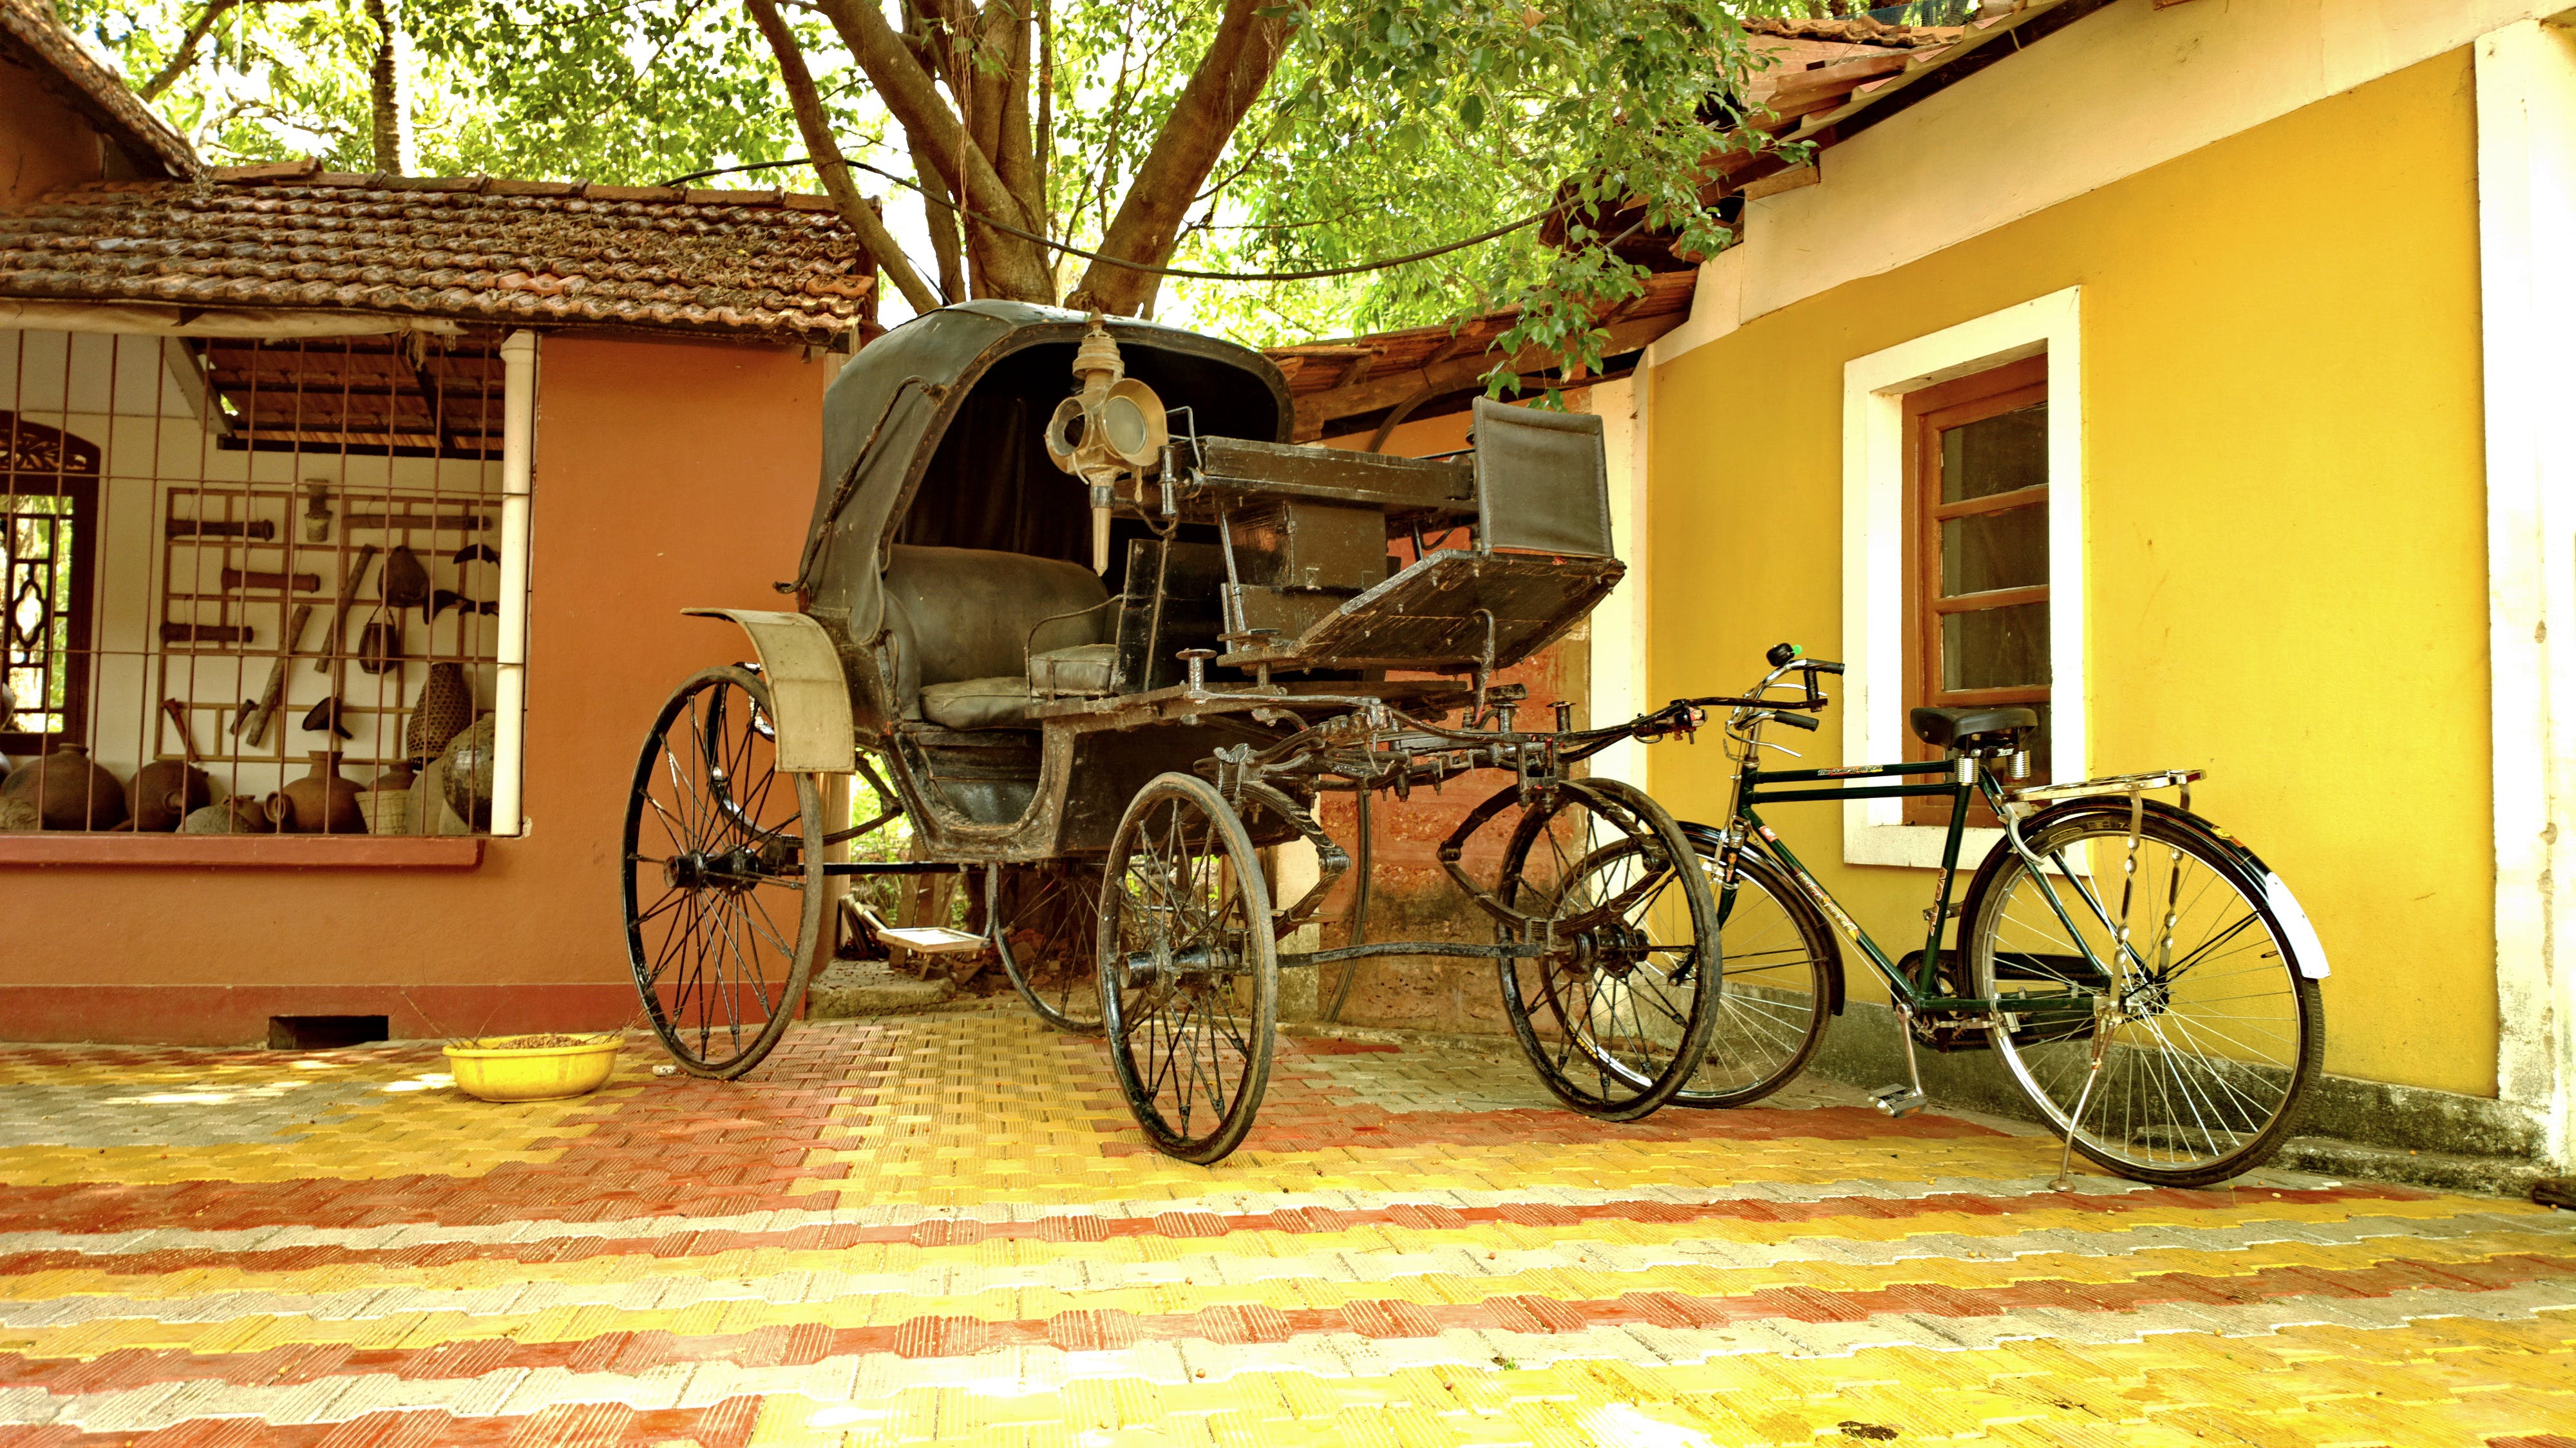 Vehicle,Mode of transport,Bicycle wheel,Yellow,Wagon,Bicycle accessory,Bicycle,Cart,Spoke,Wheel